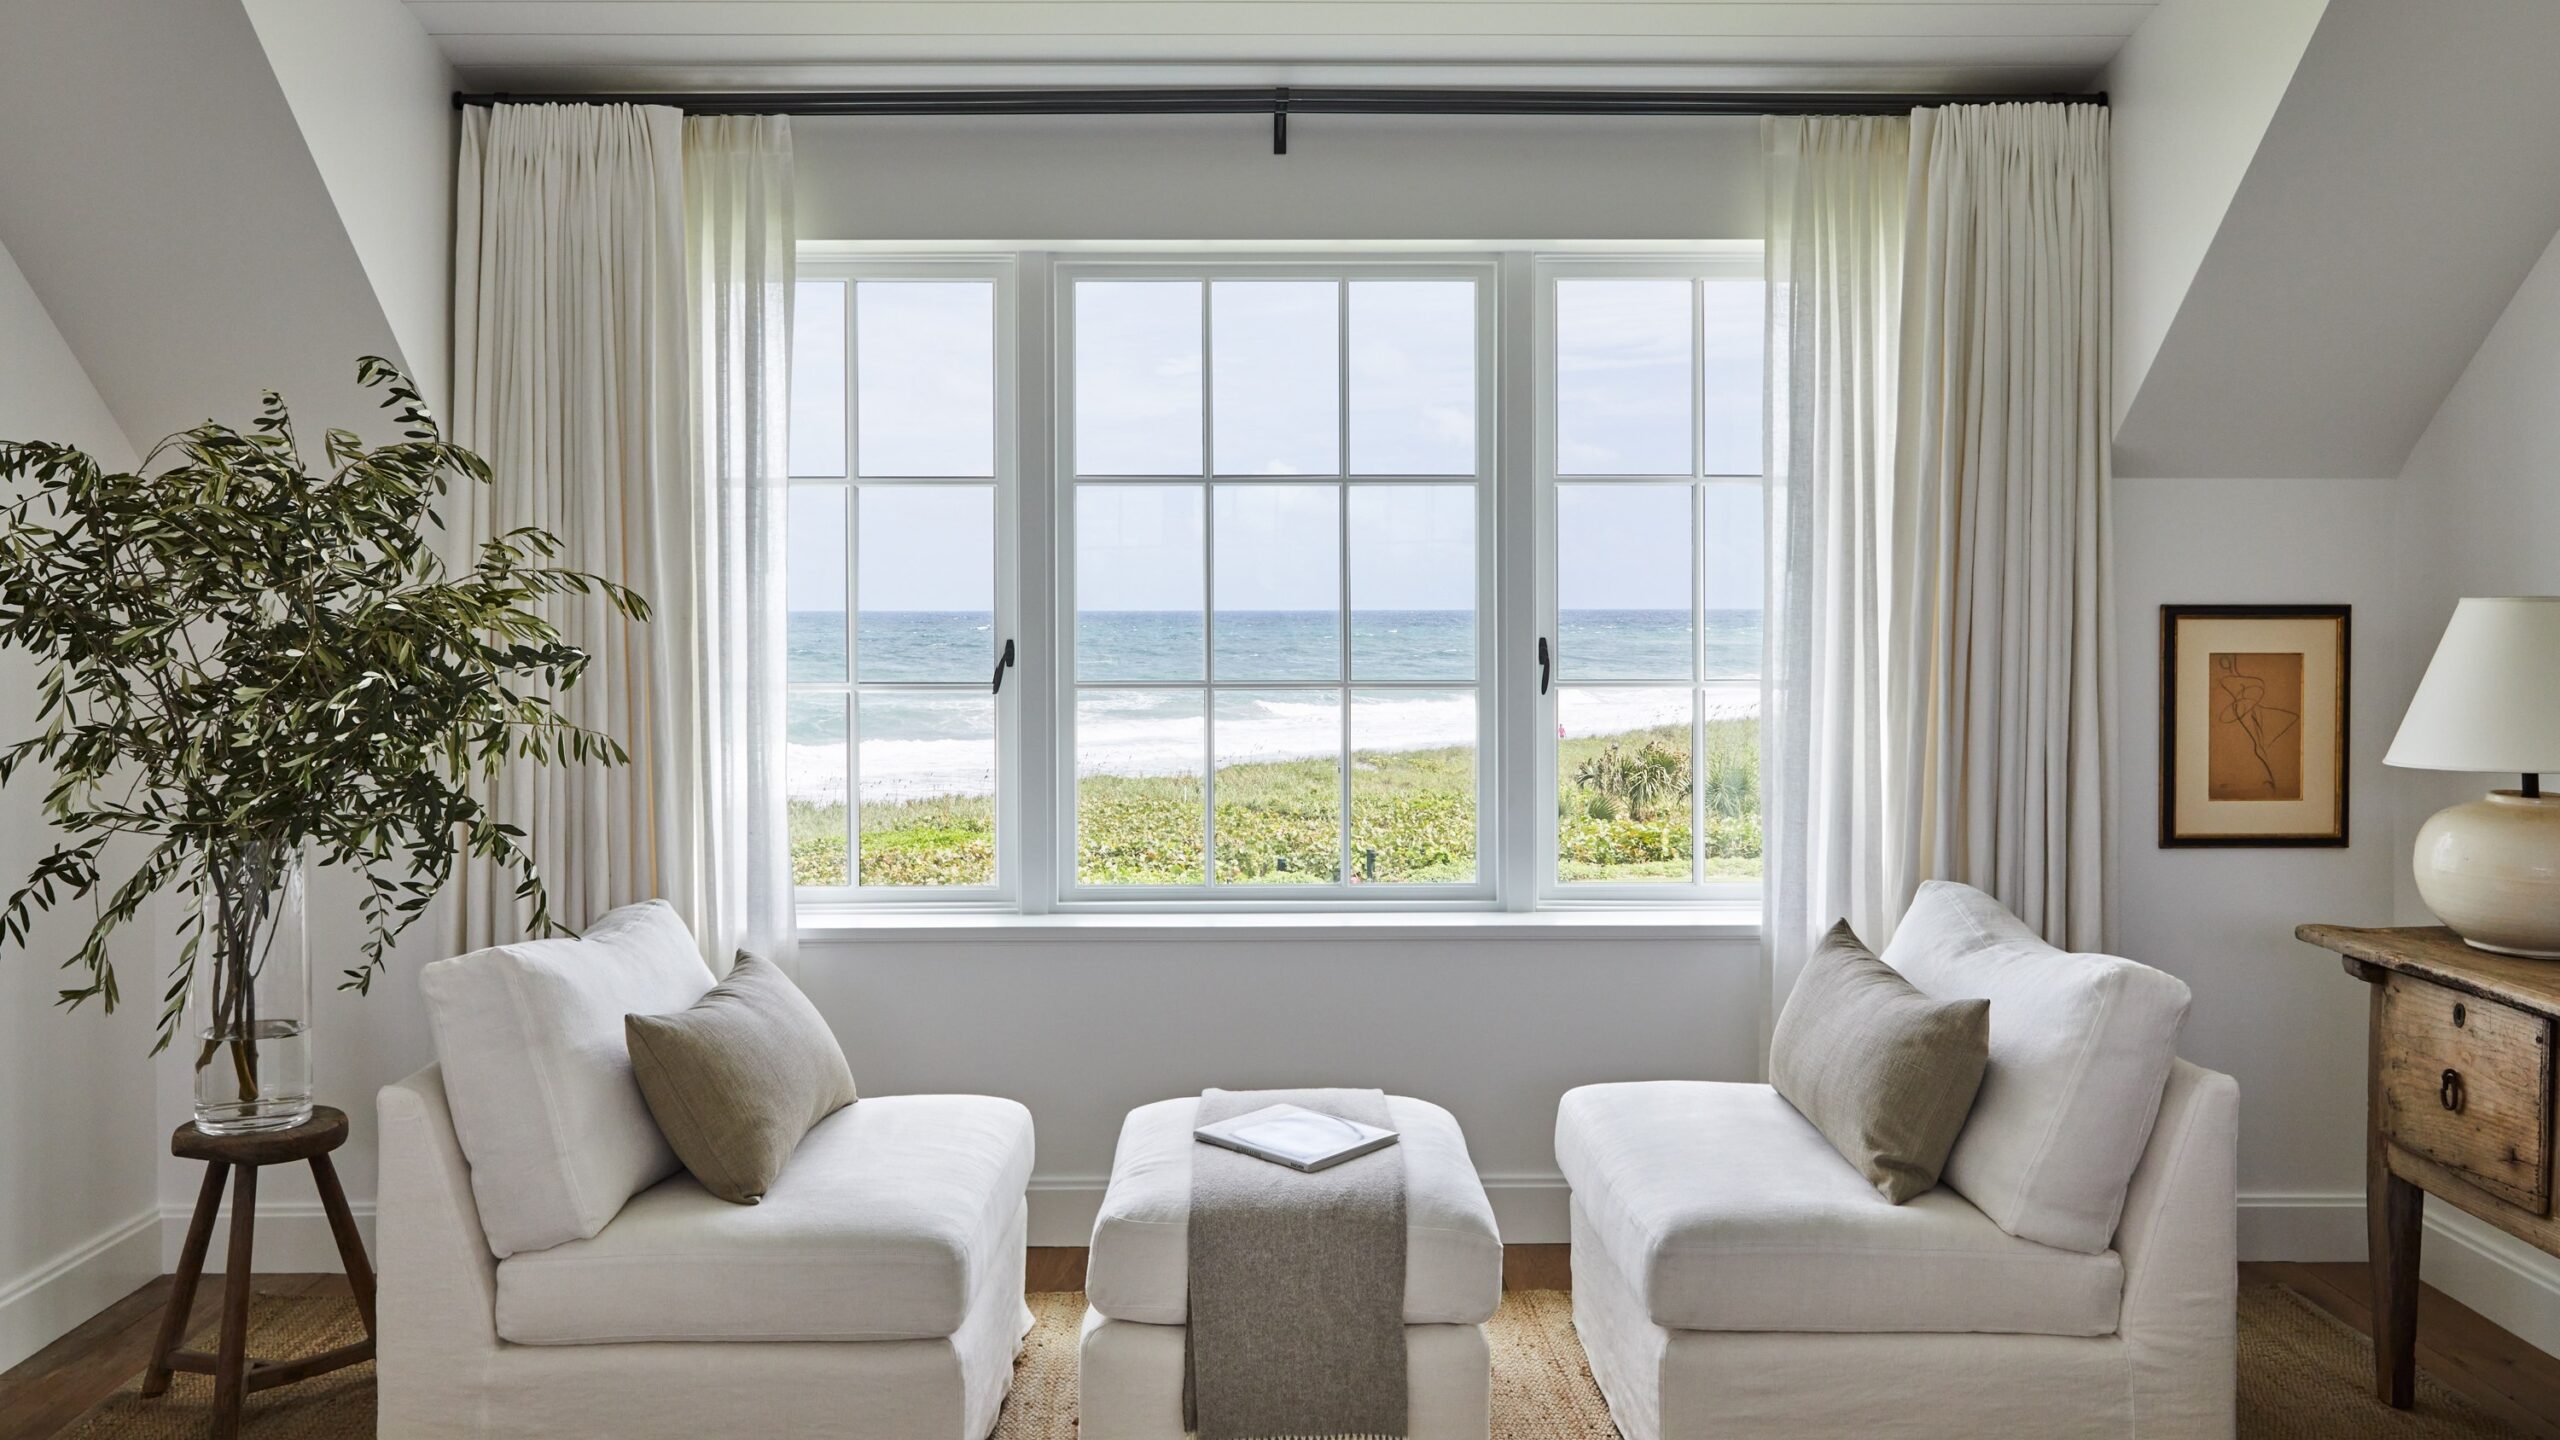 15 Living Room Window Treatments – Stylish Curtains, Blinds And pertaining to Living Room Windows